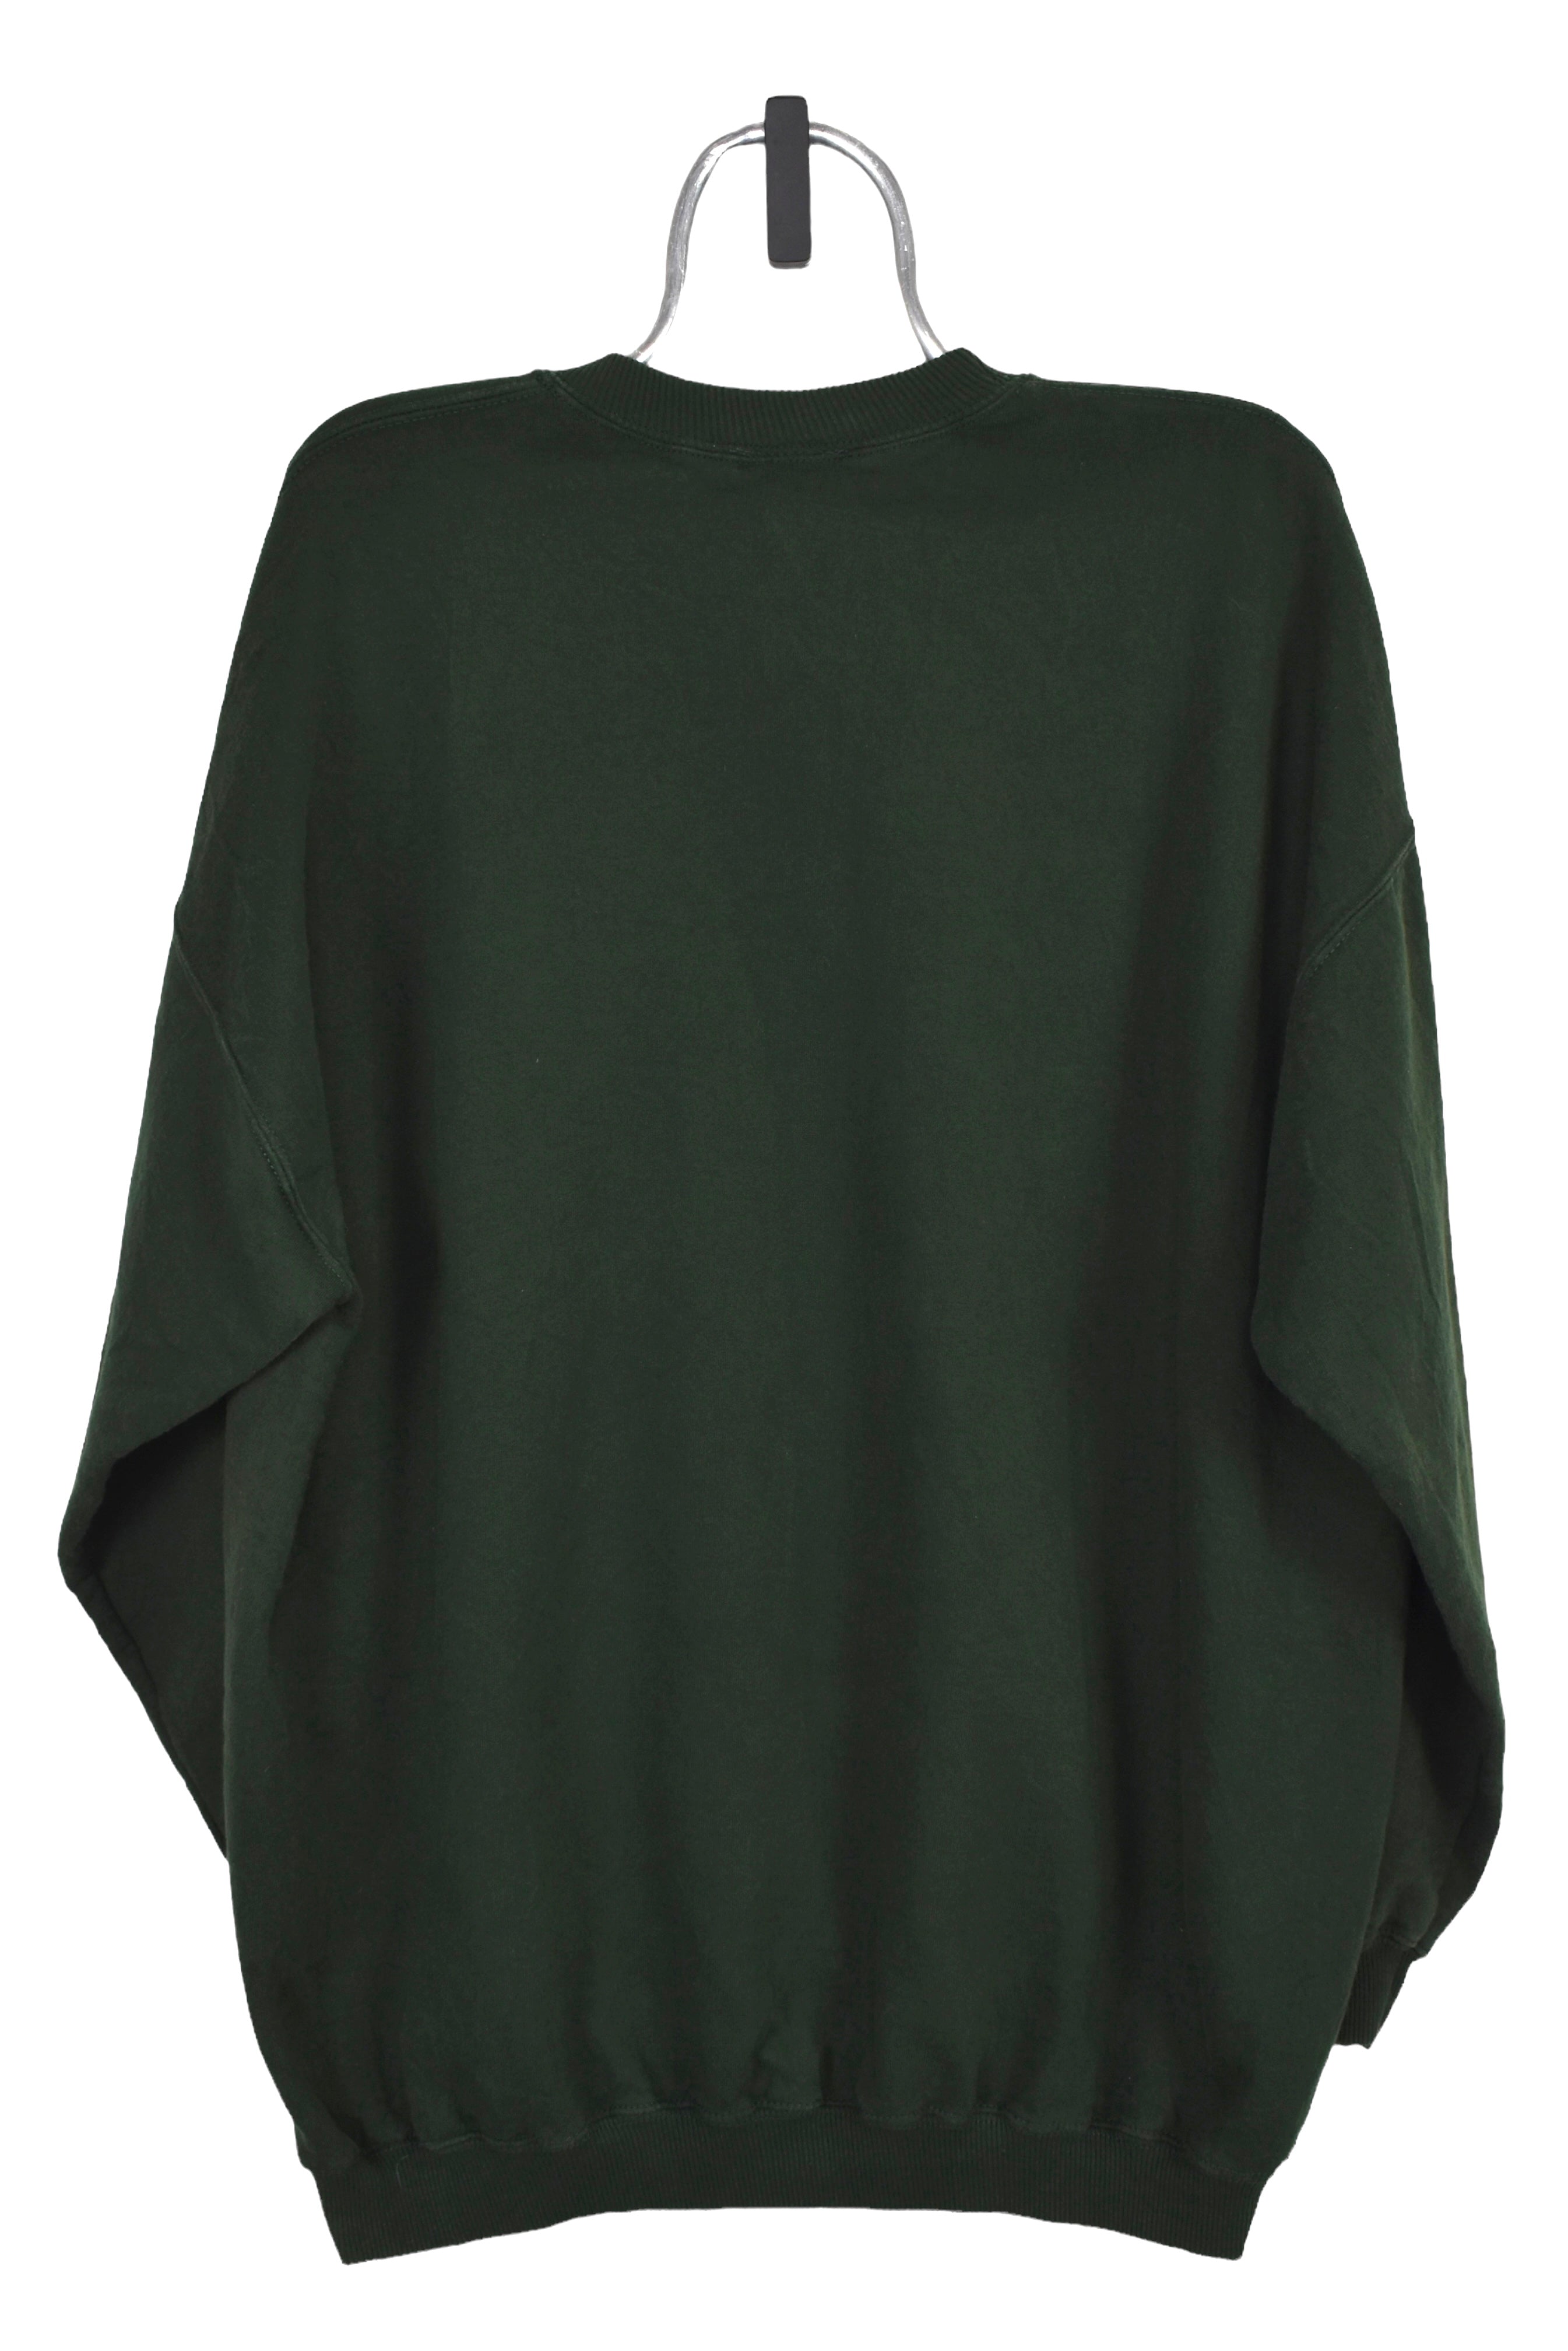 Vintage Green Bay Packers sweatshirt (XXL), green NFL graphic crewneck